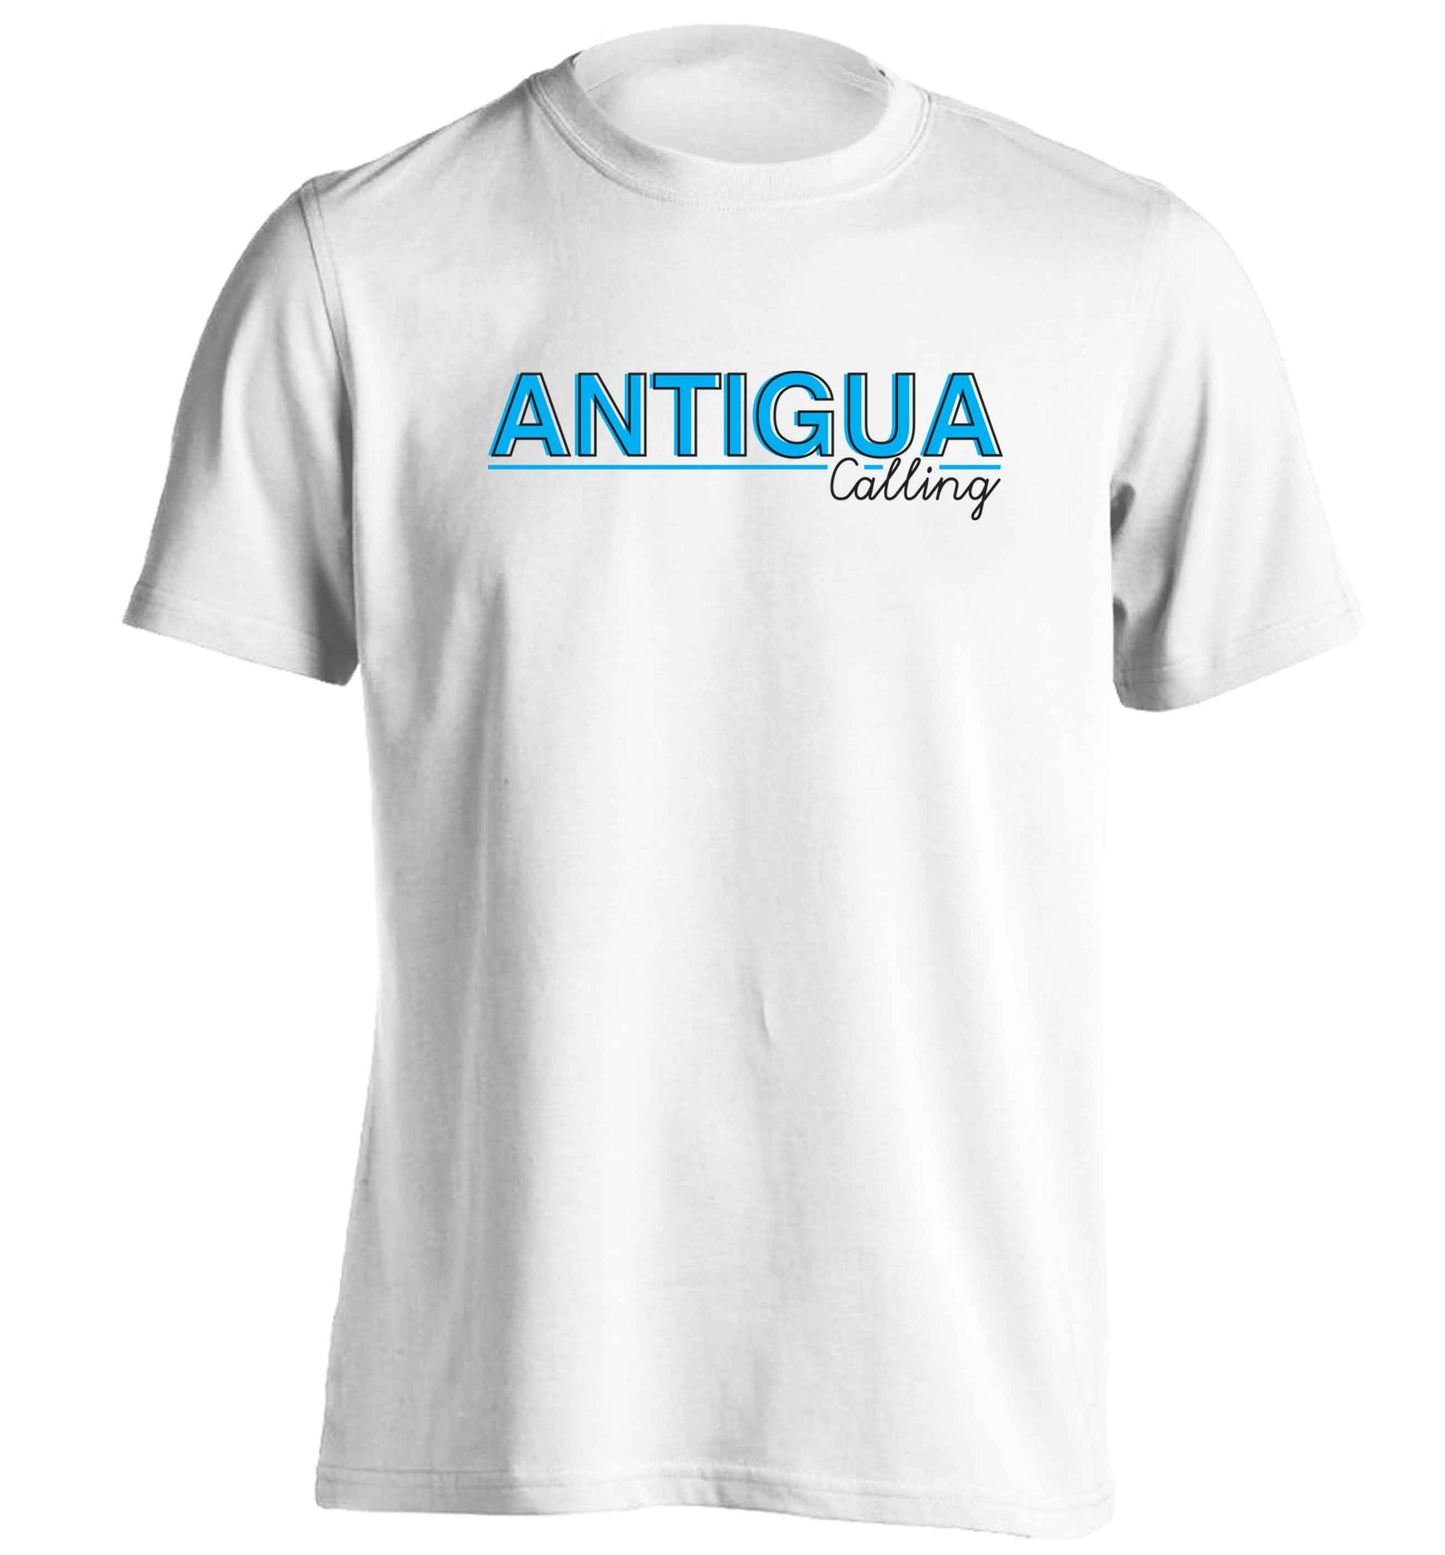 Antigua calling adults unisex white Tshirt 2XL